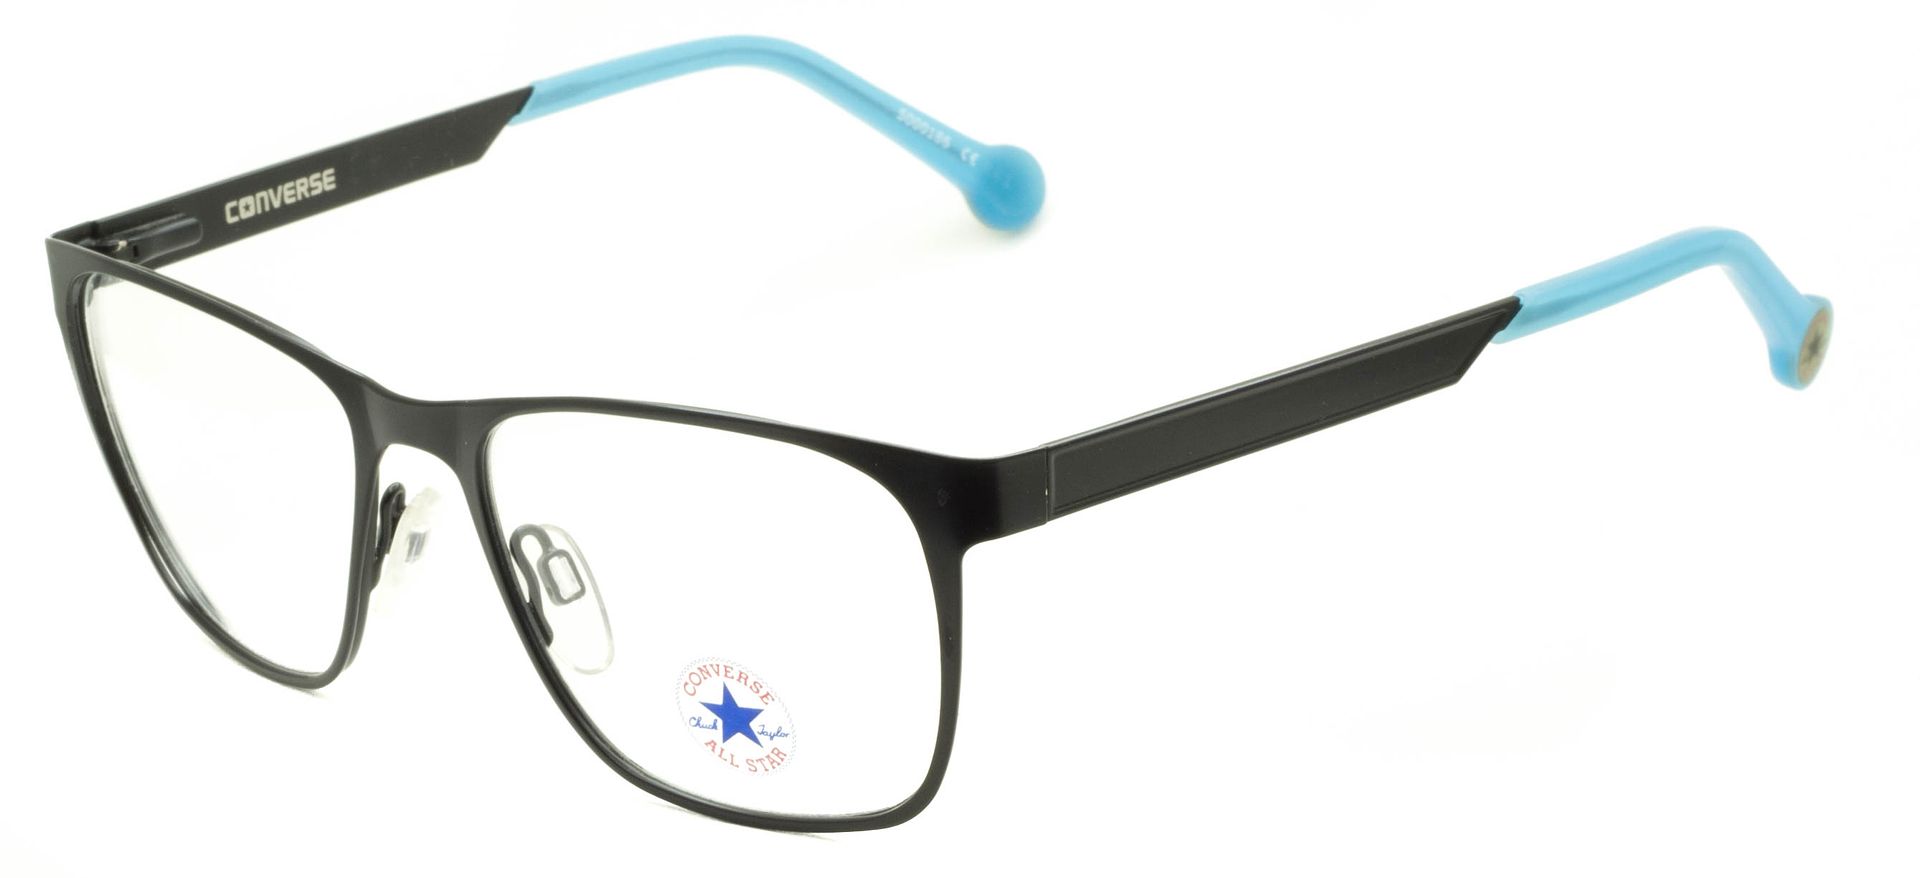 Converse All Star 23 30268951 FRAMES Glasses RX Optical Eyewear Eyeglasses  - New - GGV Eyewear